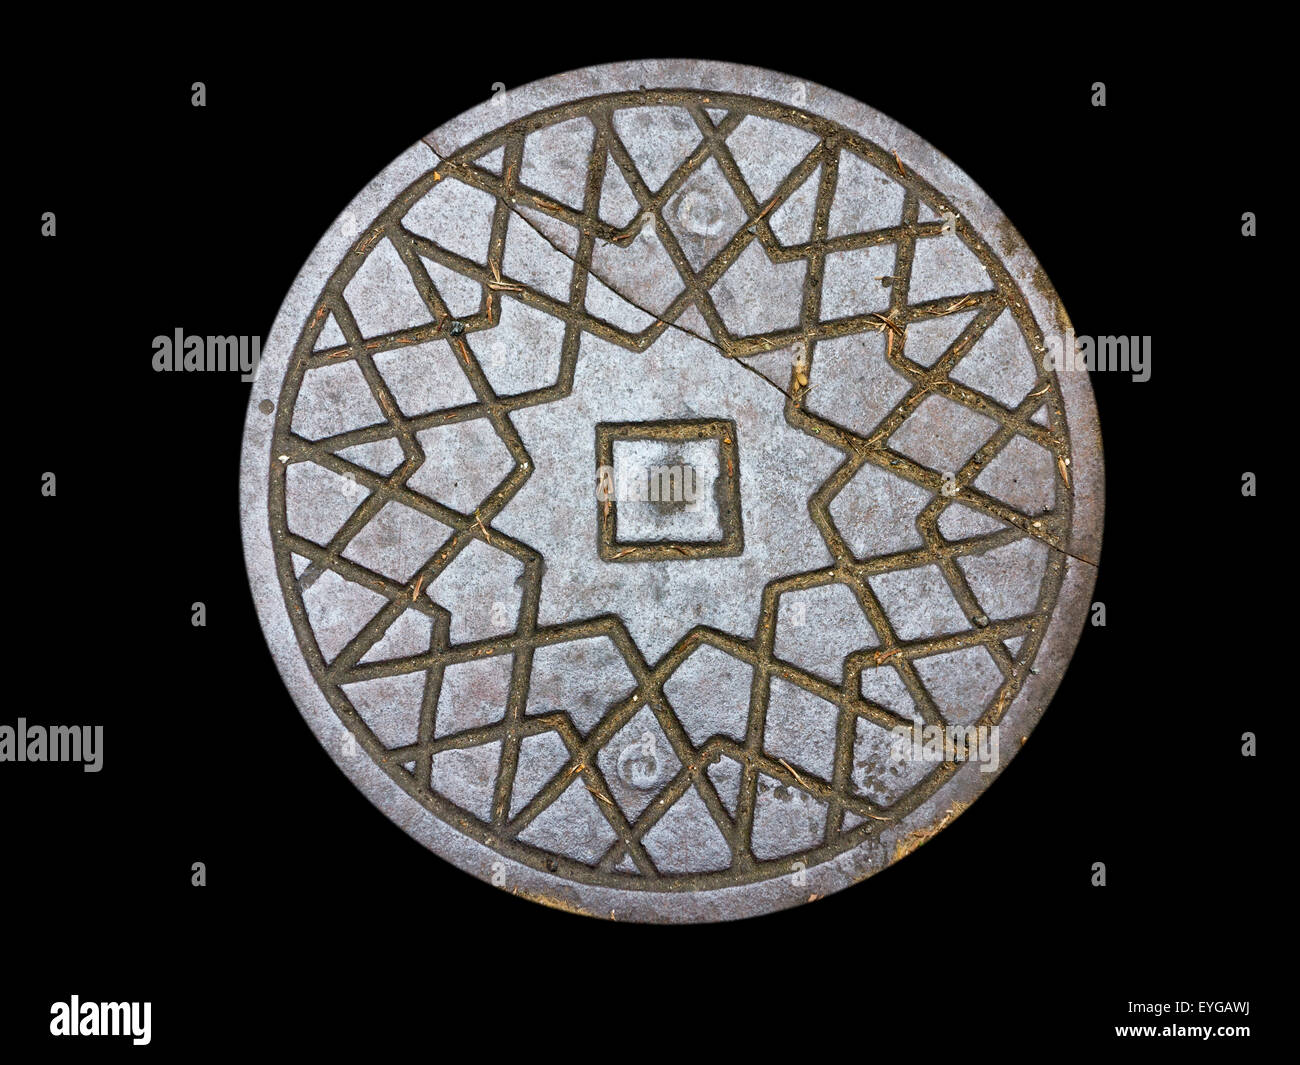 A single cast iron coal hole hatch against a black background Stock Photo